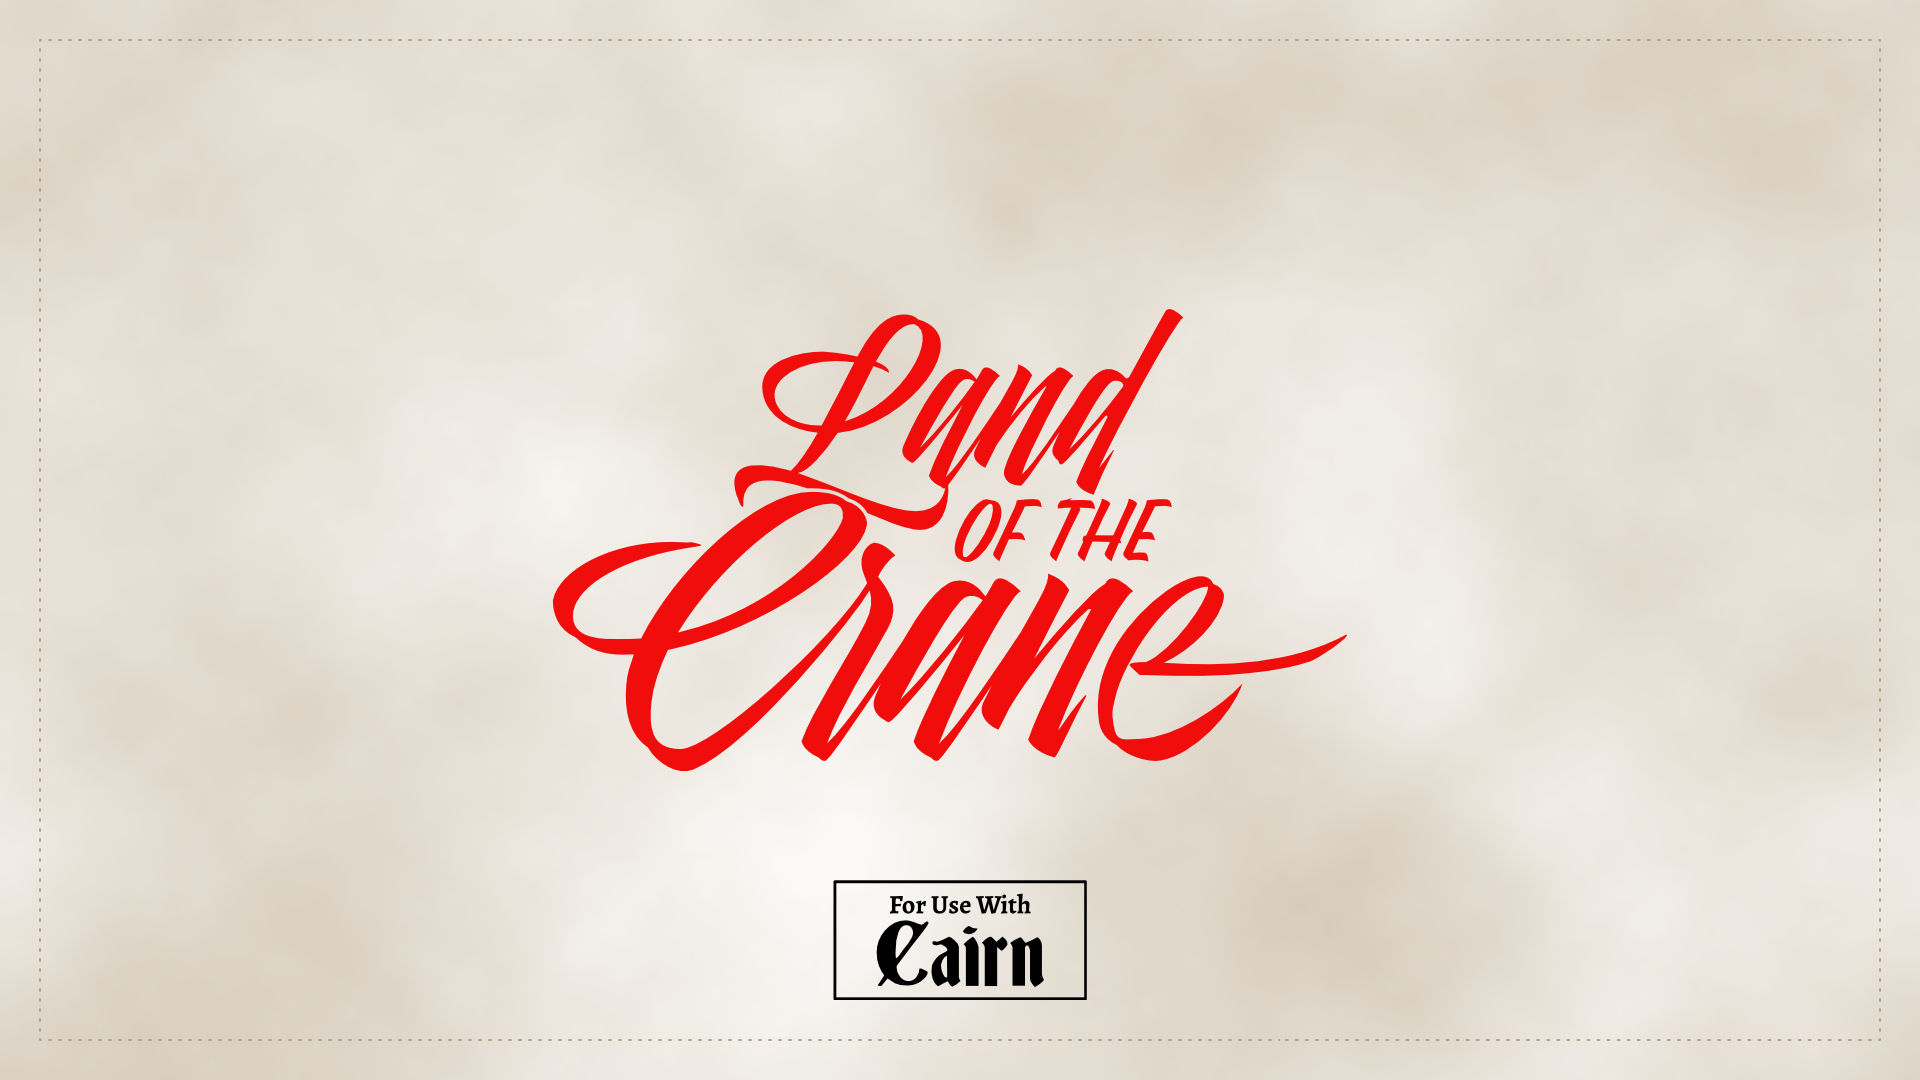 Land of the Crane promotional image